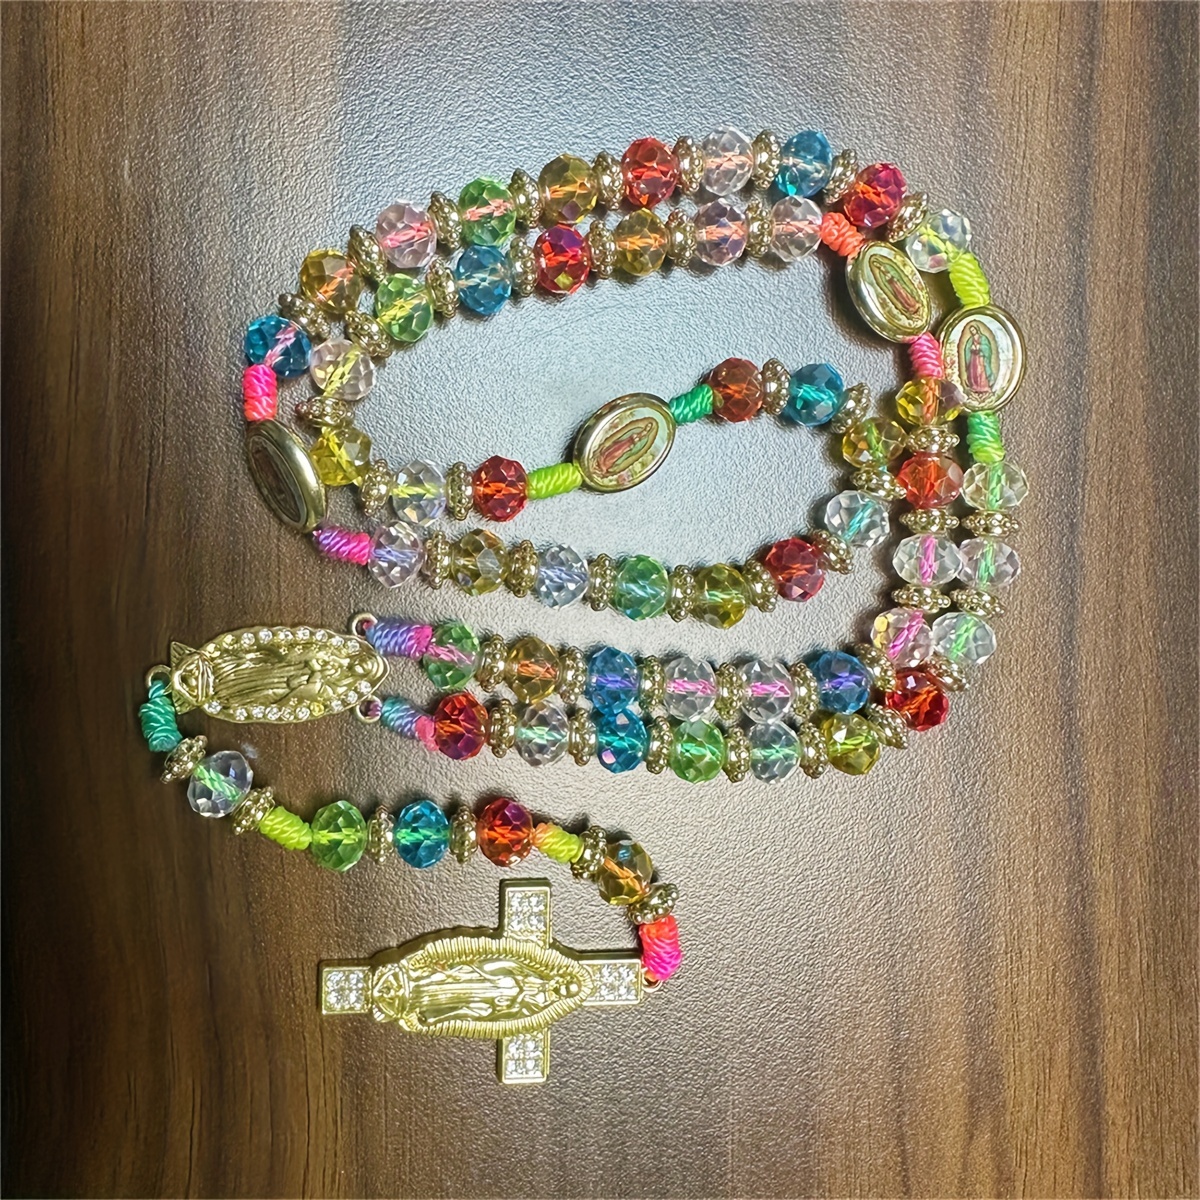 Mexican Catholic Saints Bracelet with Glass Beads